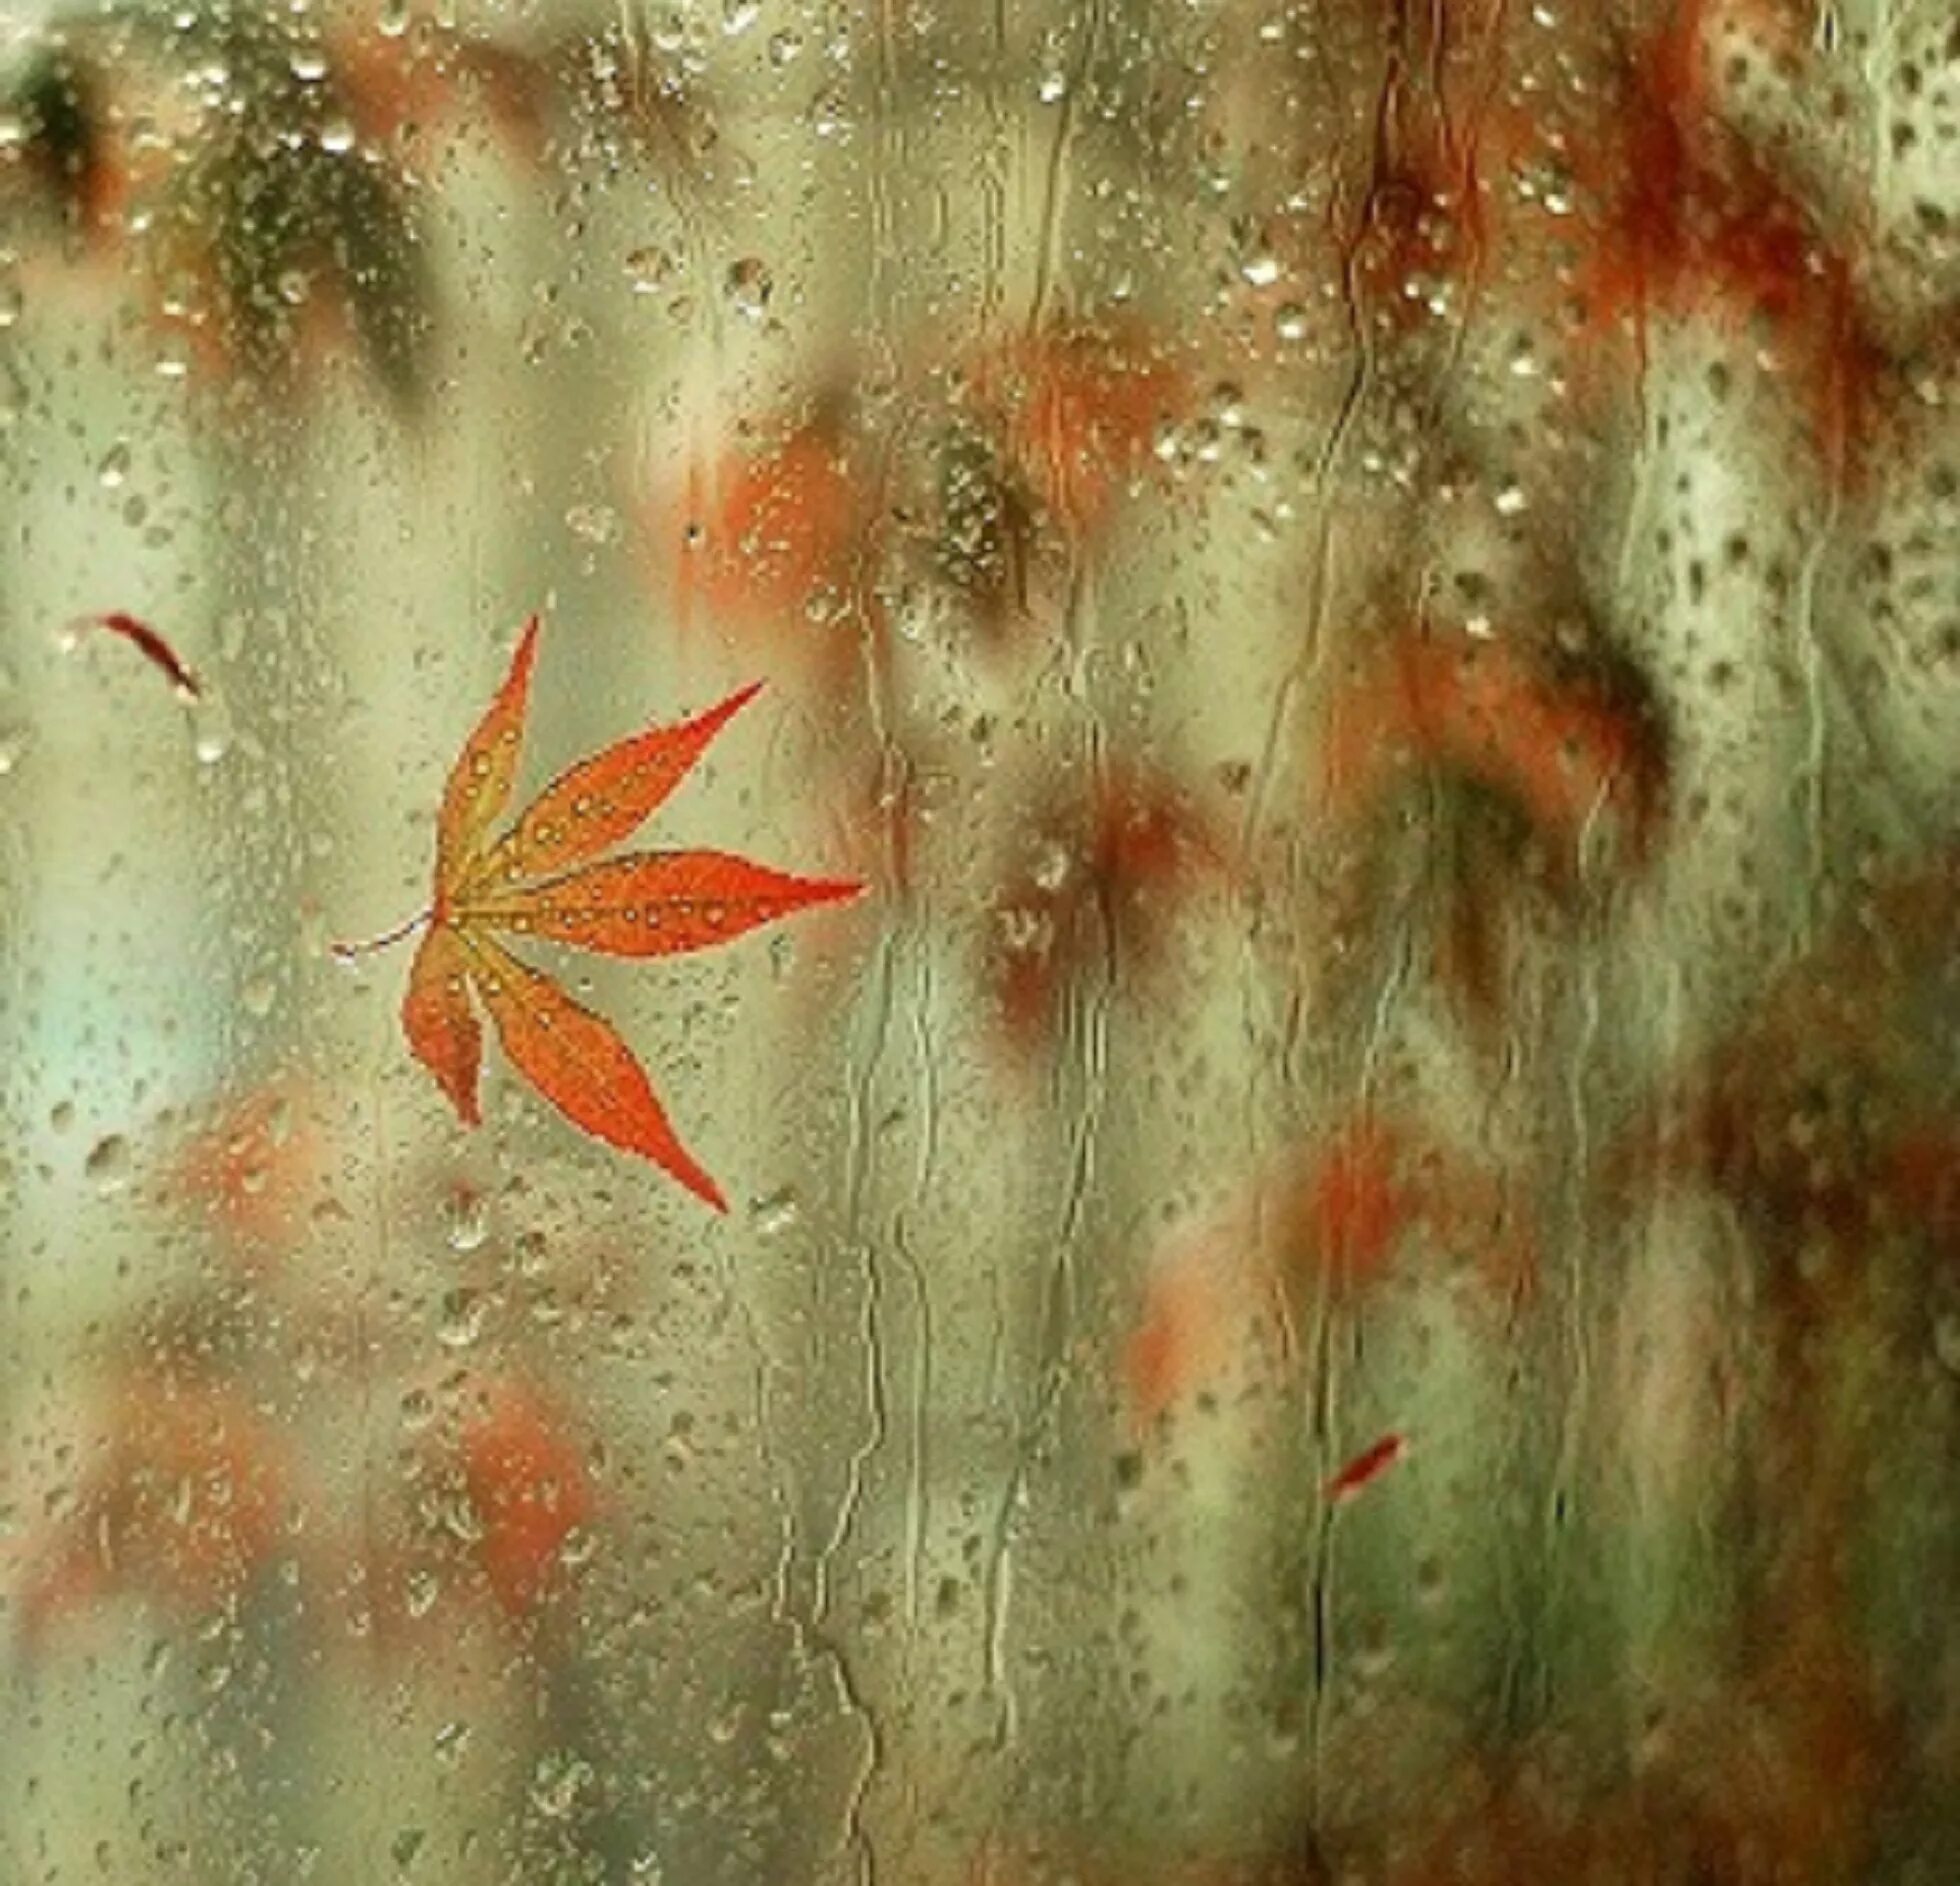 Осенний дождь. Осень дождь. Осенний лист на стекле. Дождь на листьях. Осенняя музыка дождя